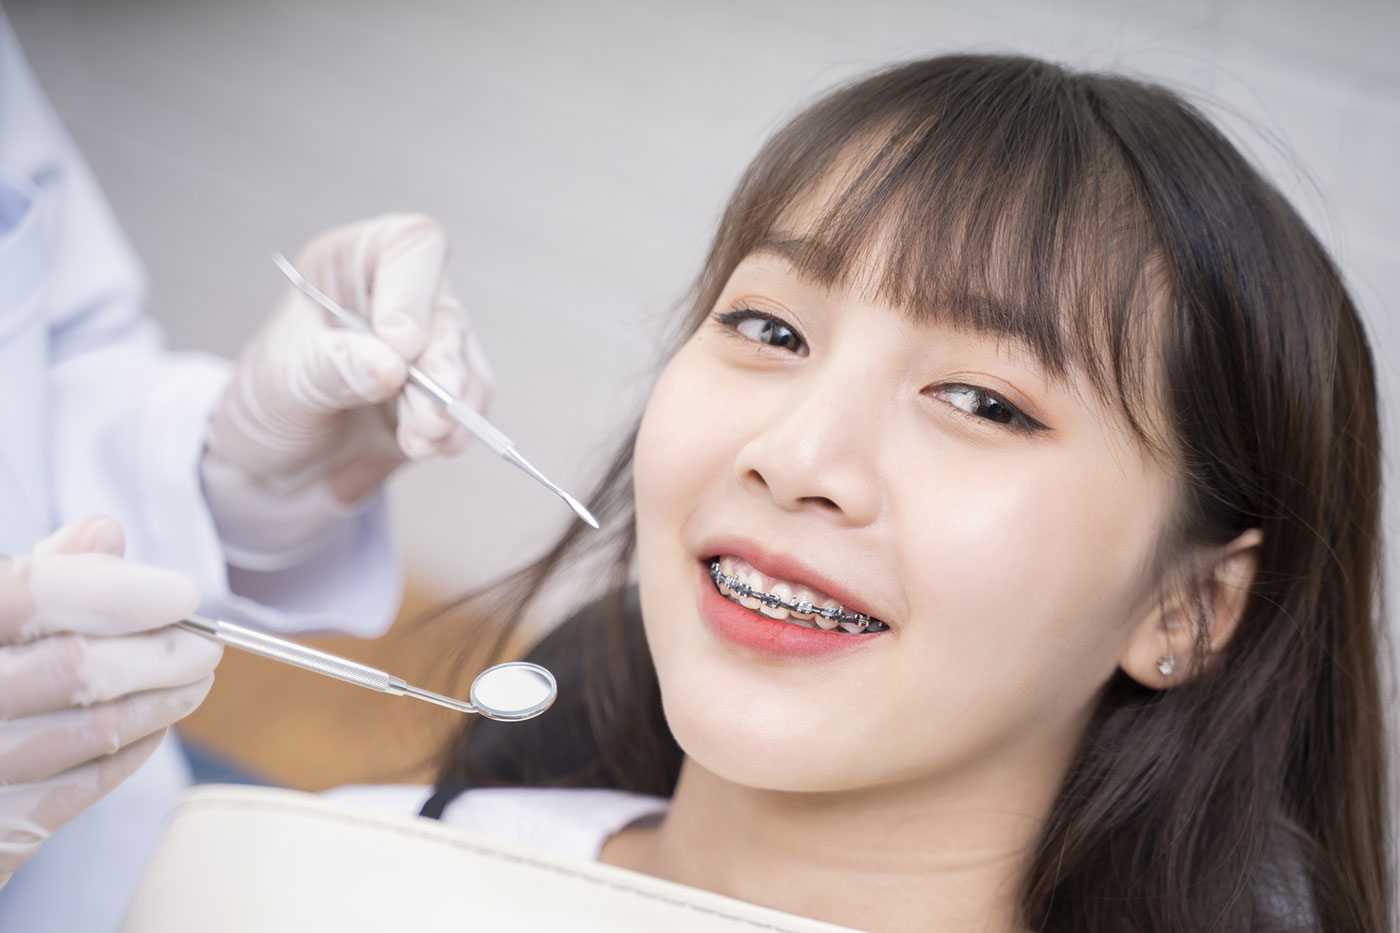 Ways To Straighten Your Teeth